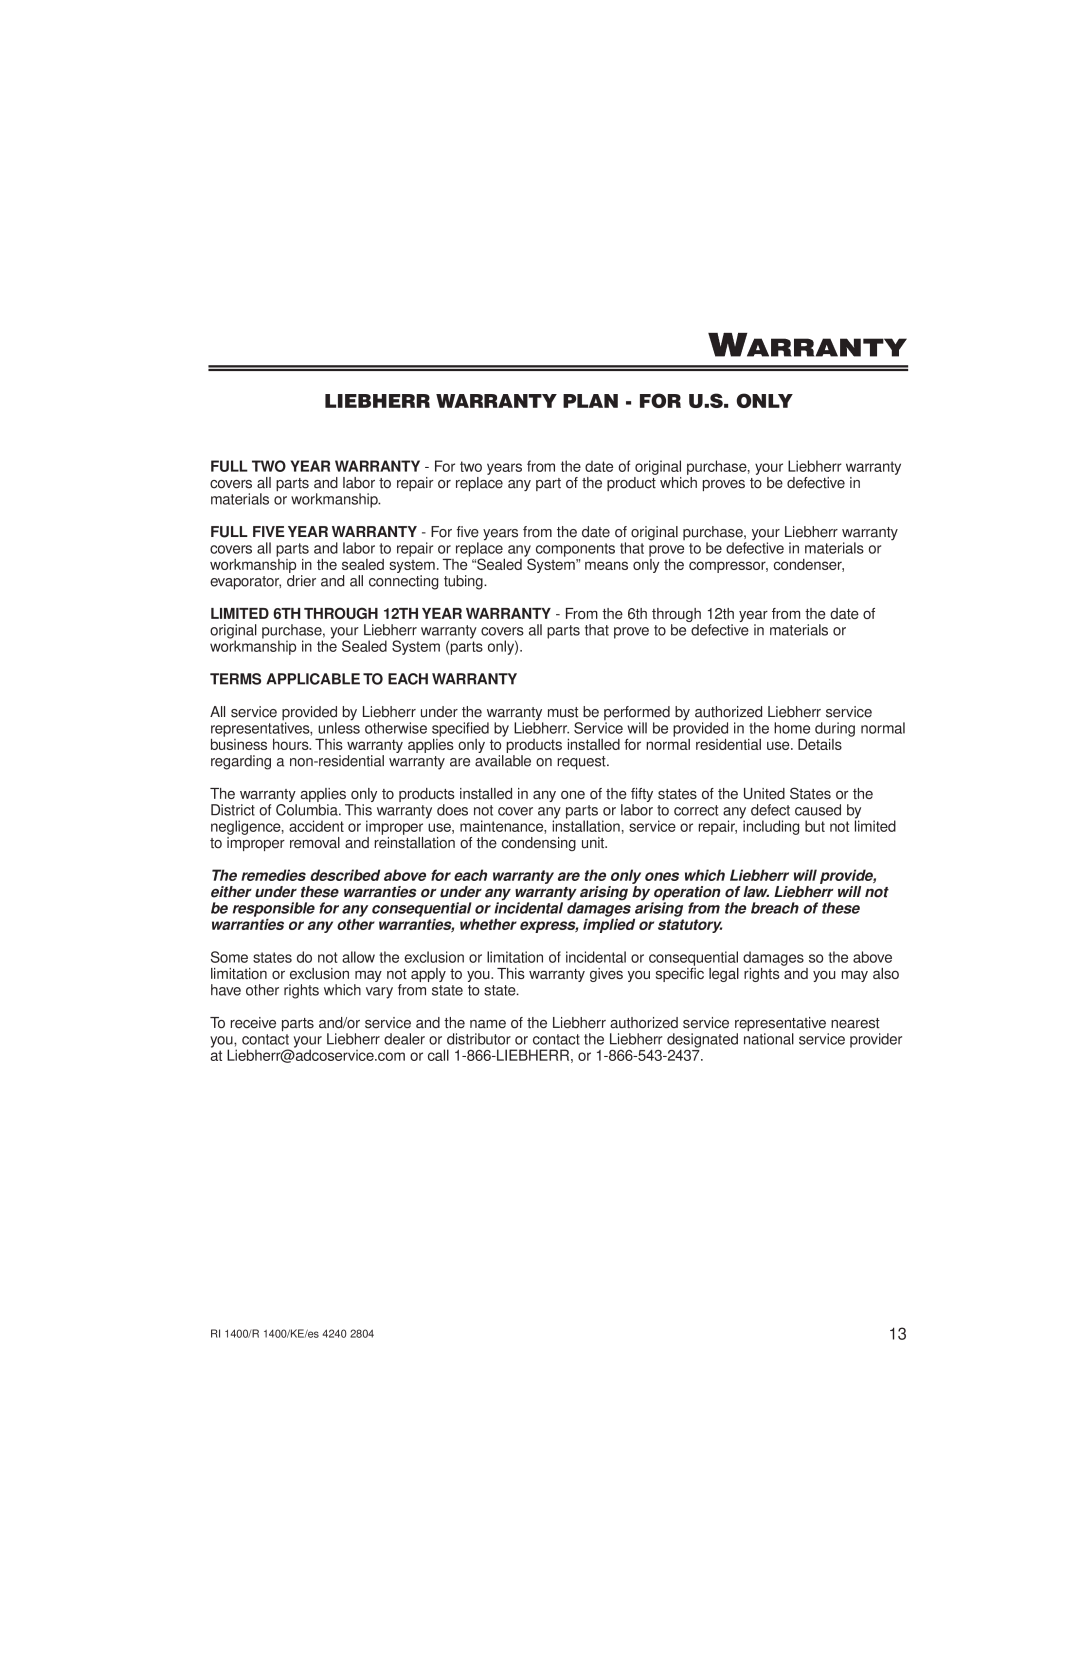 Liebherr RI1400, KE/ES 4240 2804, R1400, 7082 246-00 manuel dutilisation Liebherr Warranty Plan - For U.S. Only 